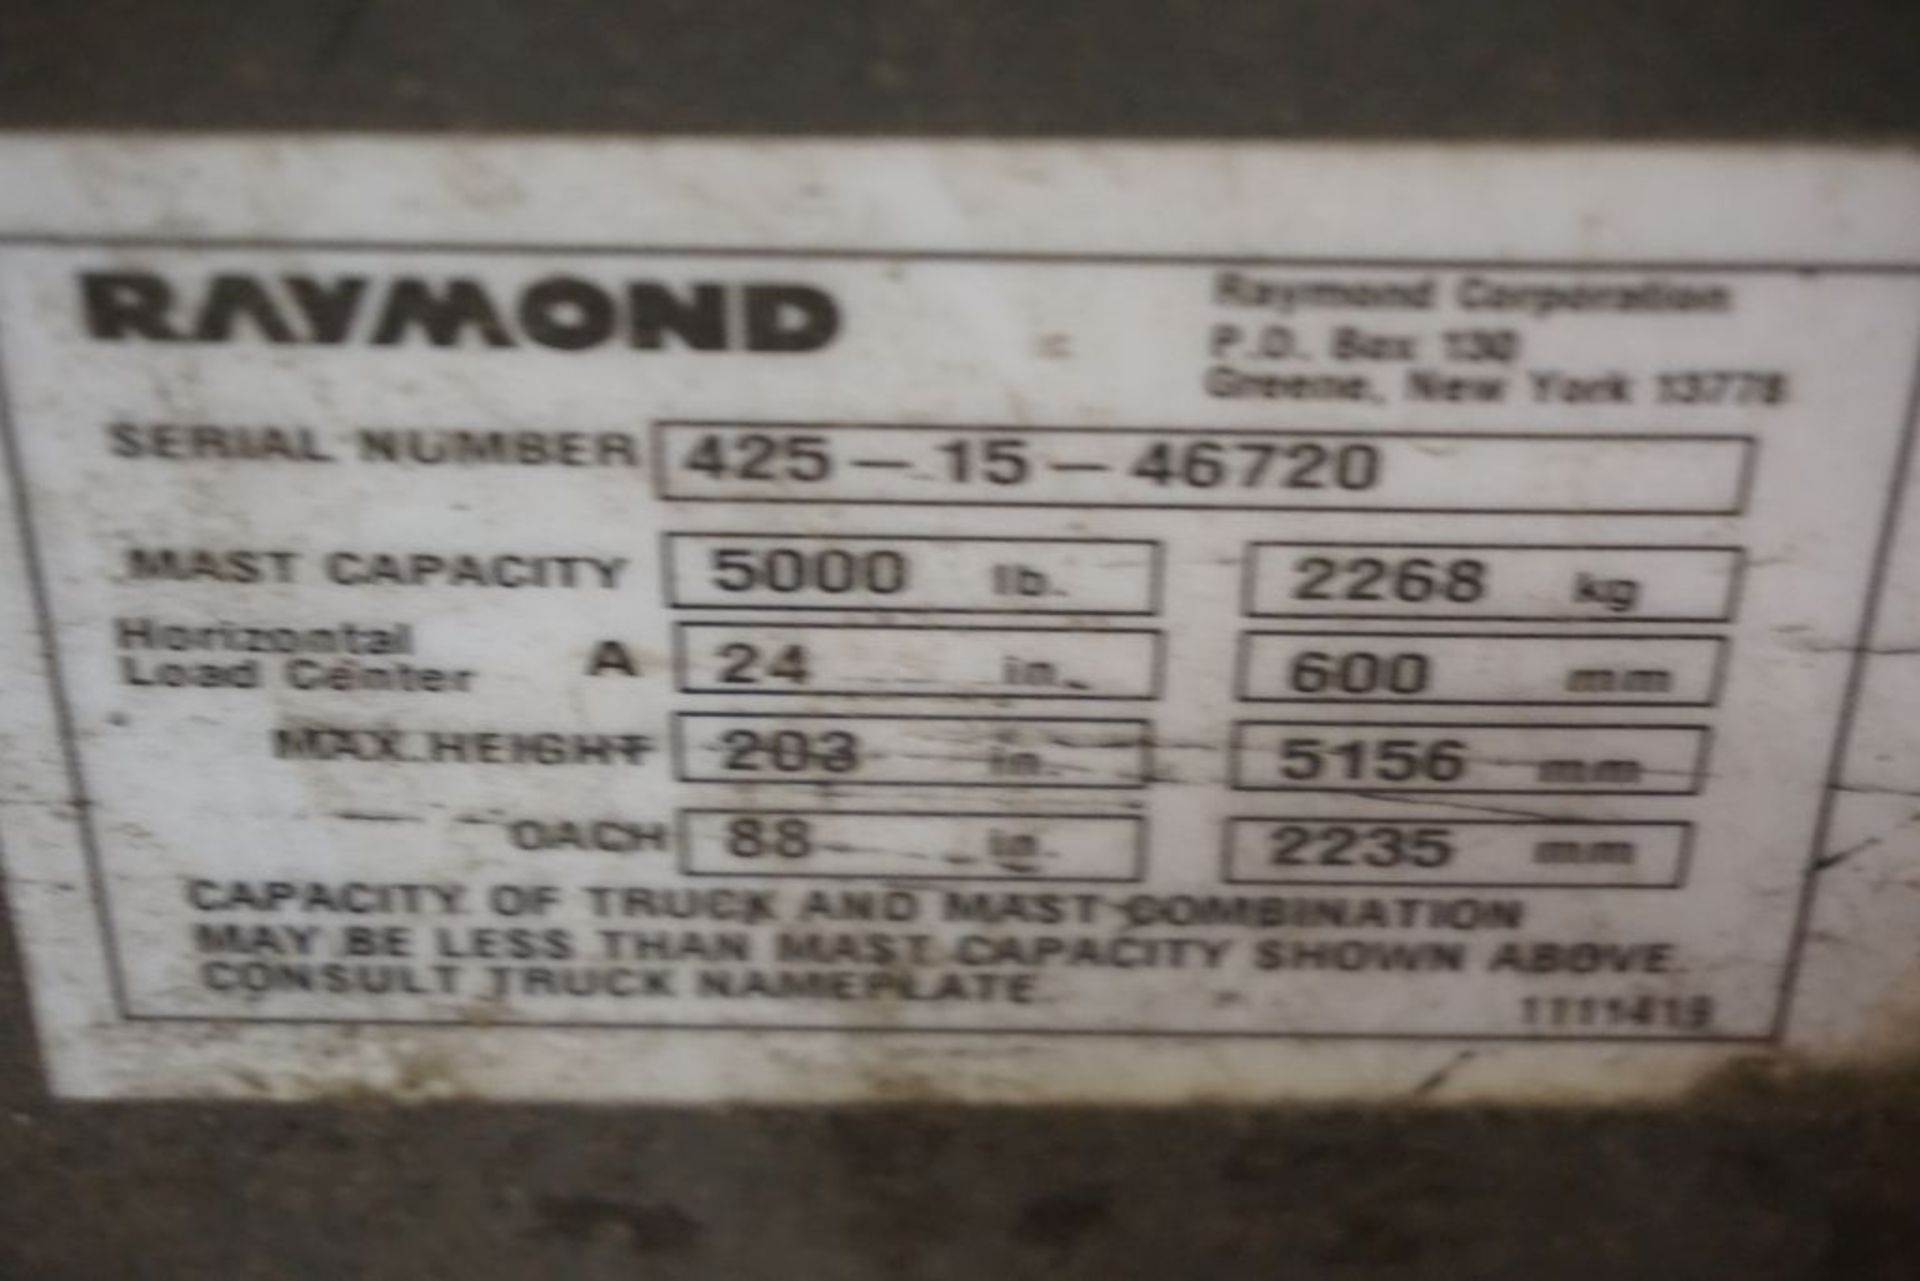 Raymond 425 C40TT Docker Stand Up Electric Forklift - Model No. 425-C40TT; Serial No. 425-15- - Image 17 of 22